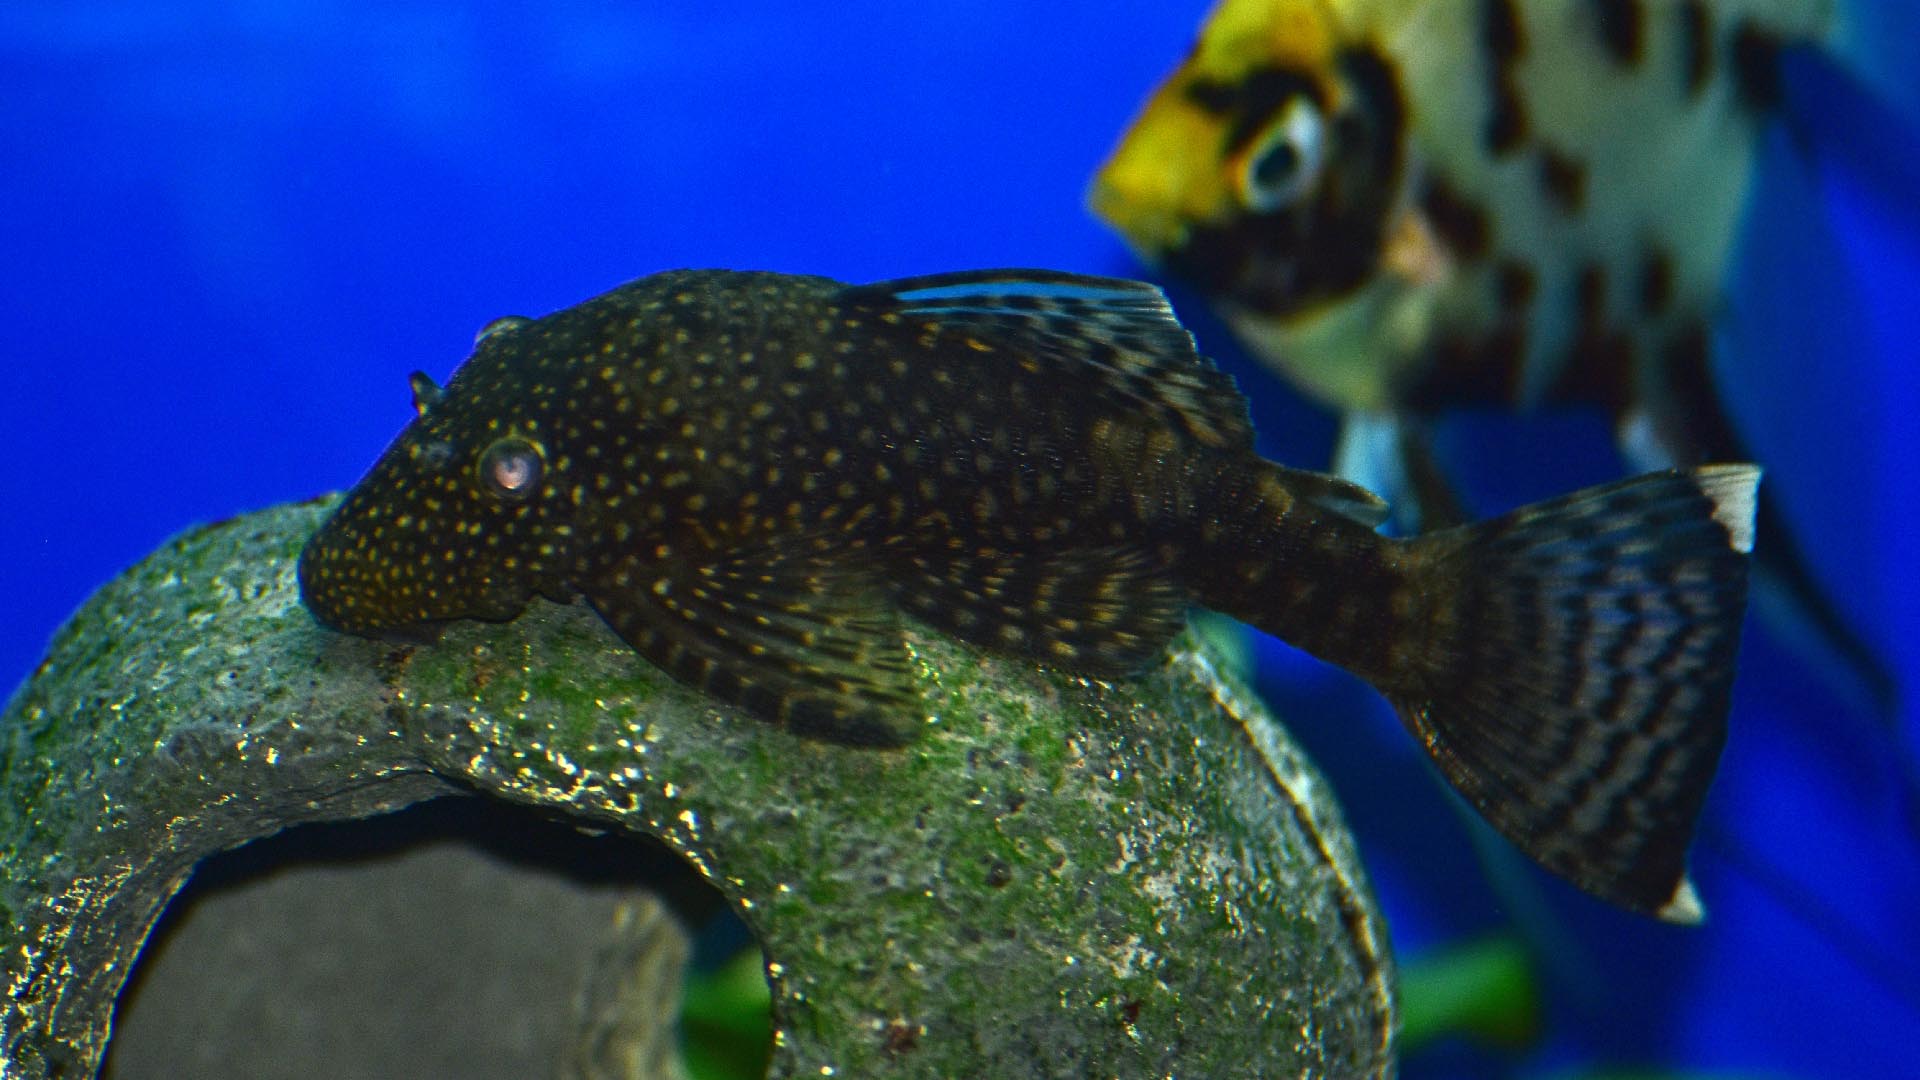 Bristlenose plecostomus or suckermouth Ancistrus catfish, which has a sucker mouth